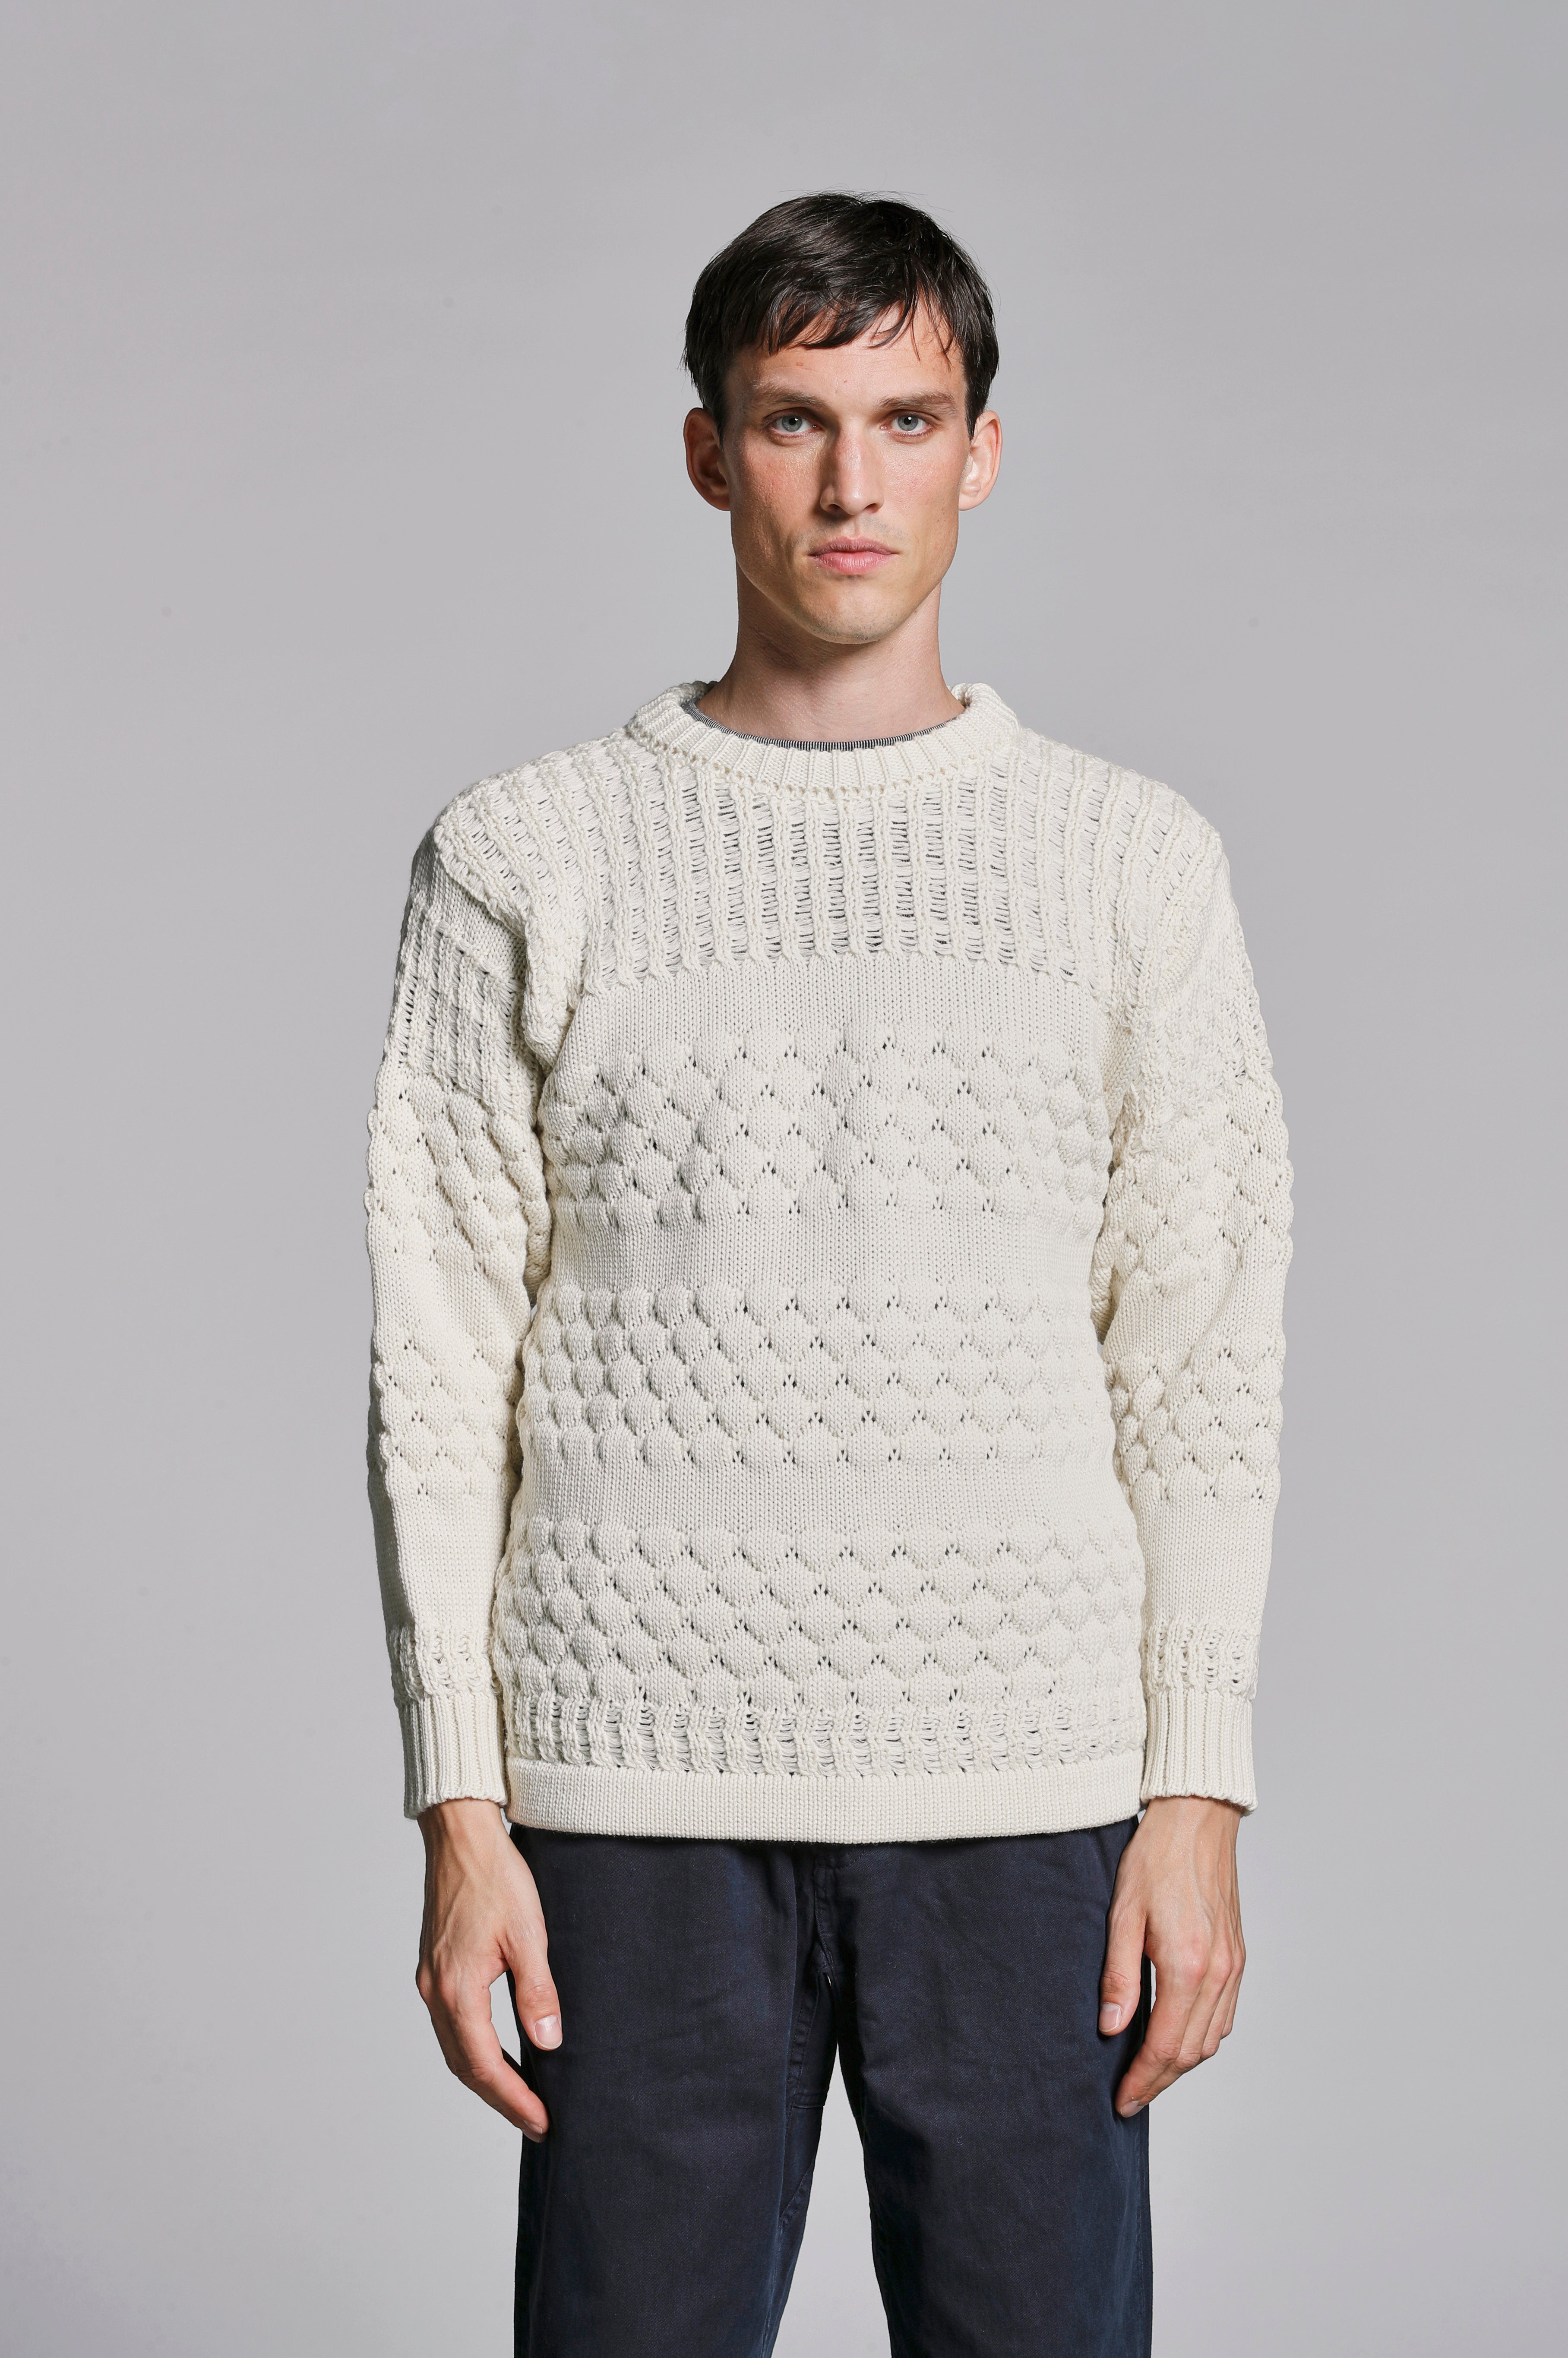 White heavy textured knitted crew neck | MACRO | S. N. S. HERNING – S ...